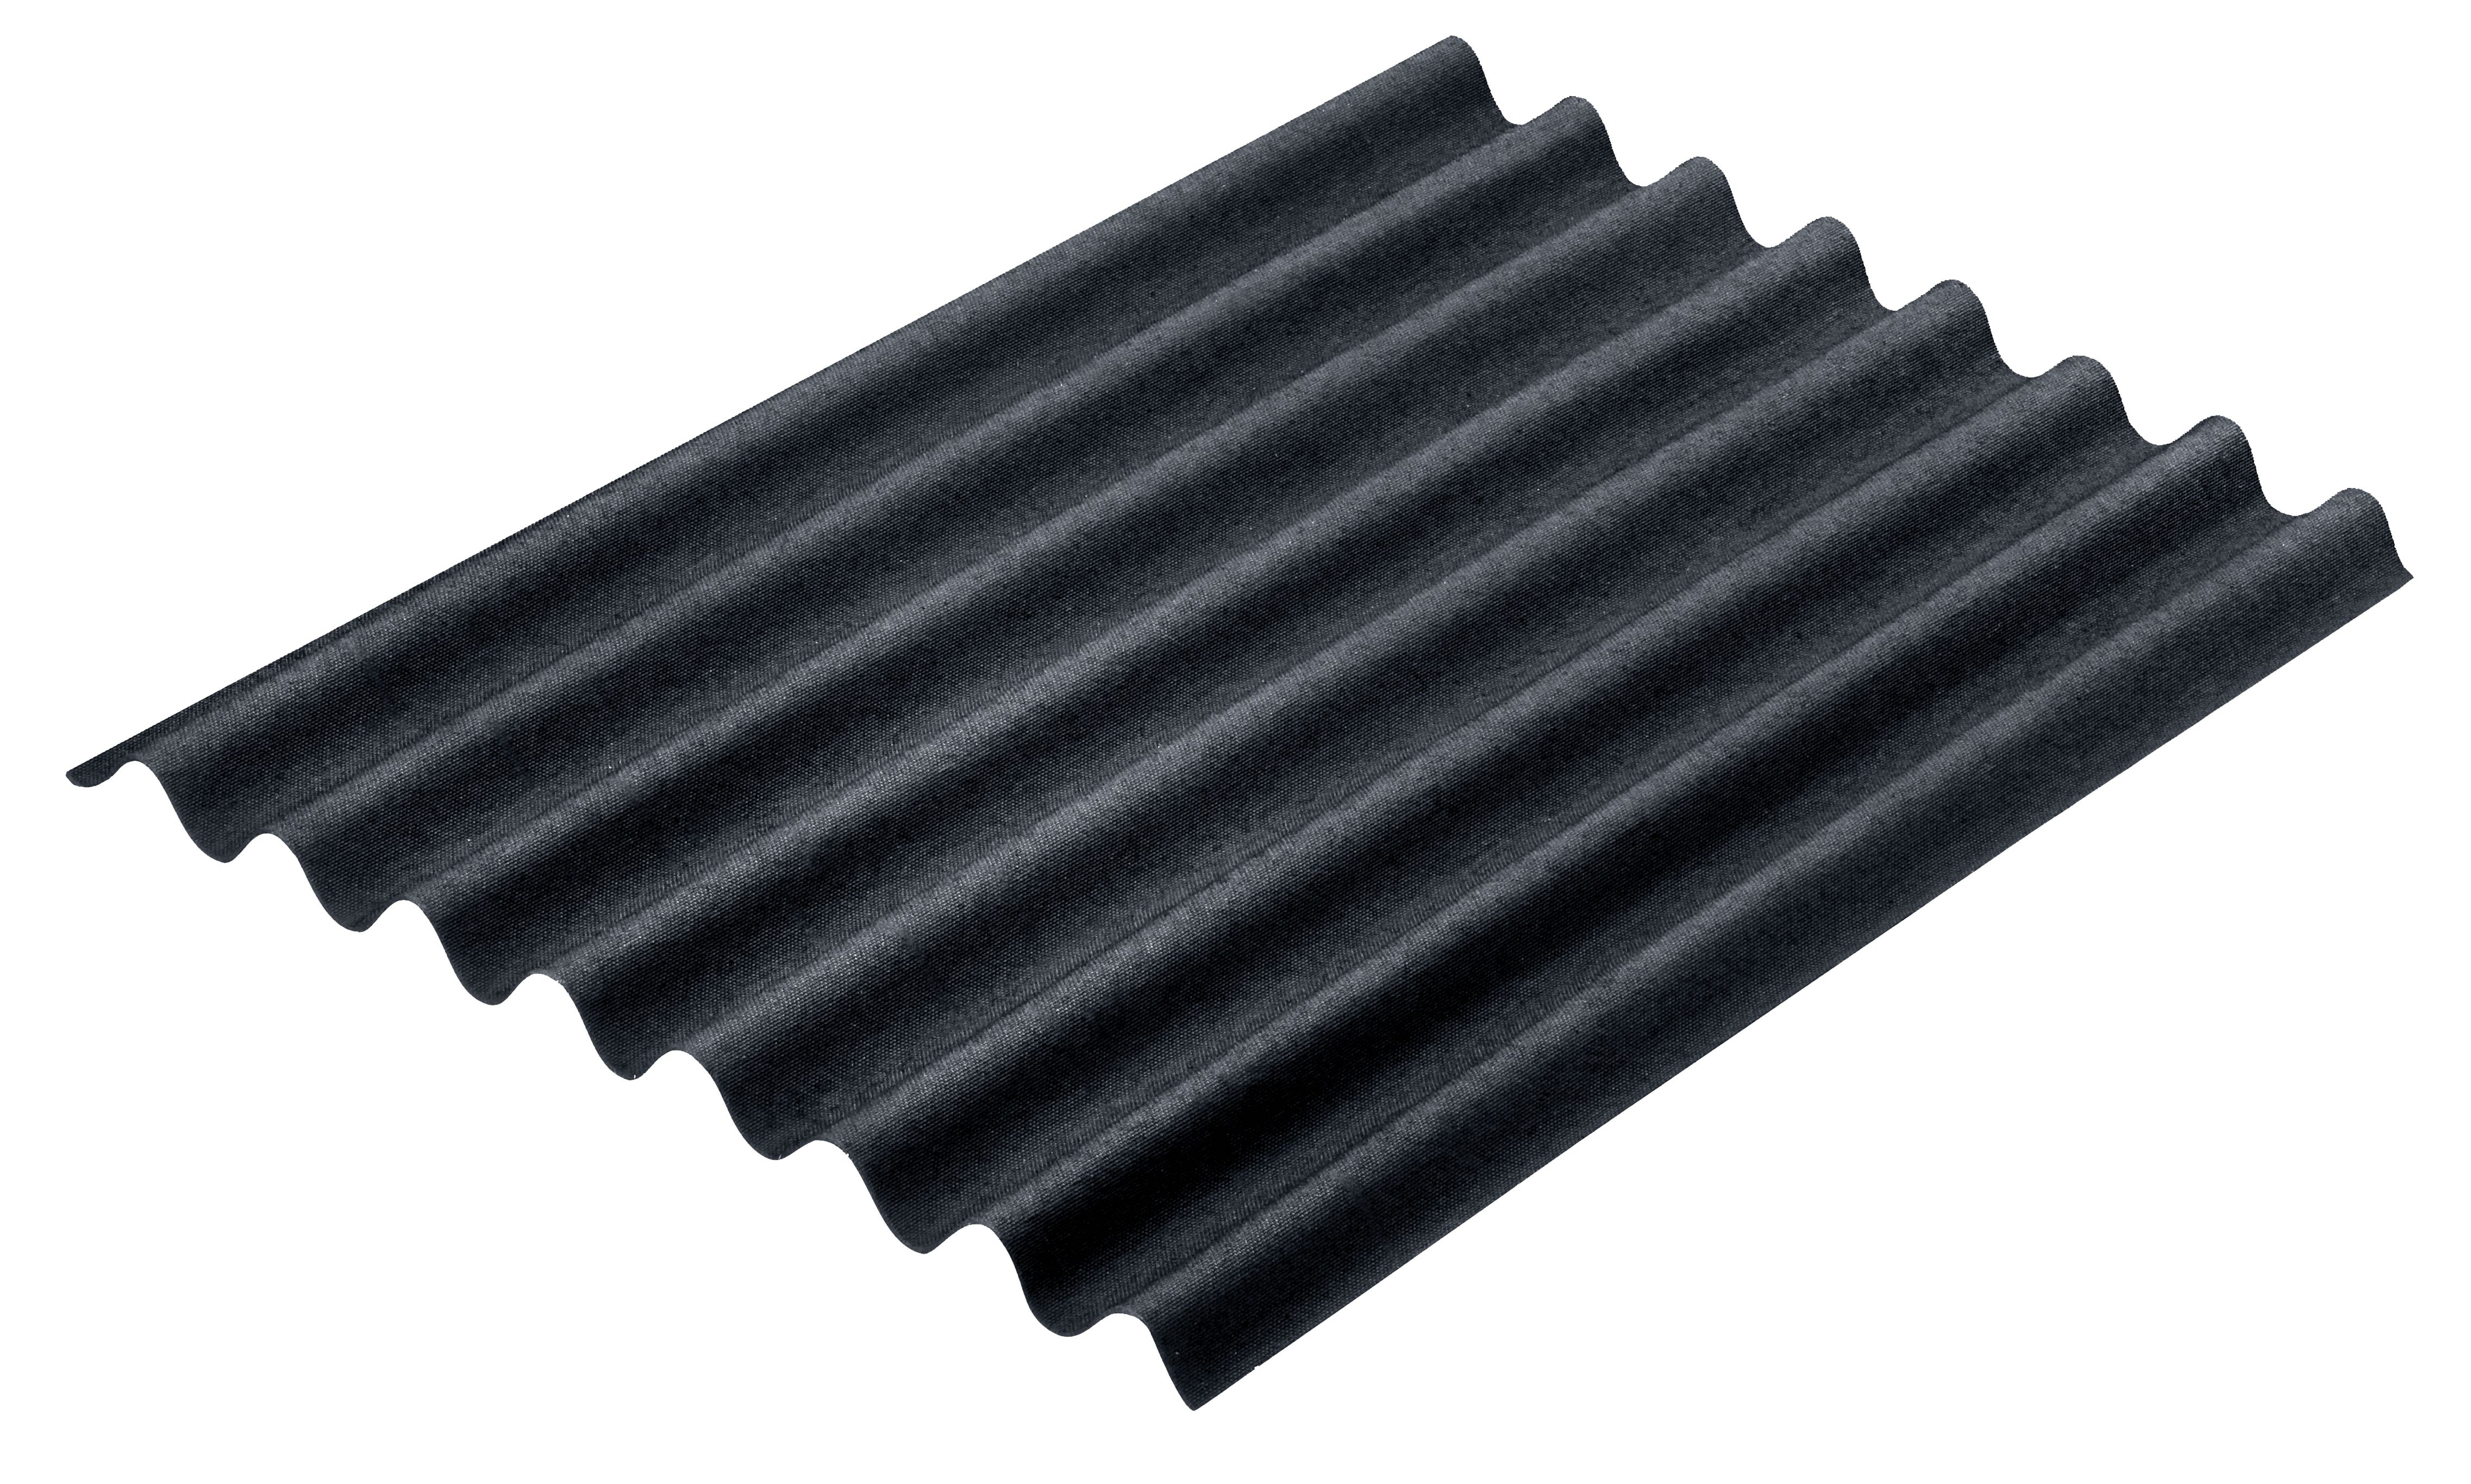 Onduline Easyline Intense Black Bitumen Corrugated Roof Sheet - 760 x 1000 x 2.6mm